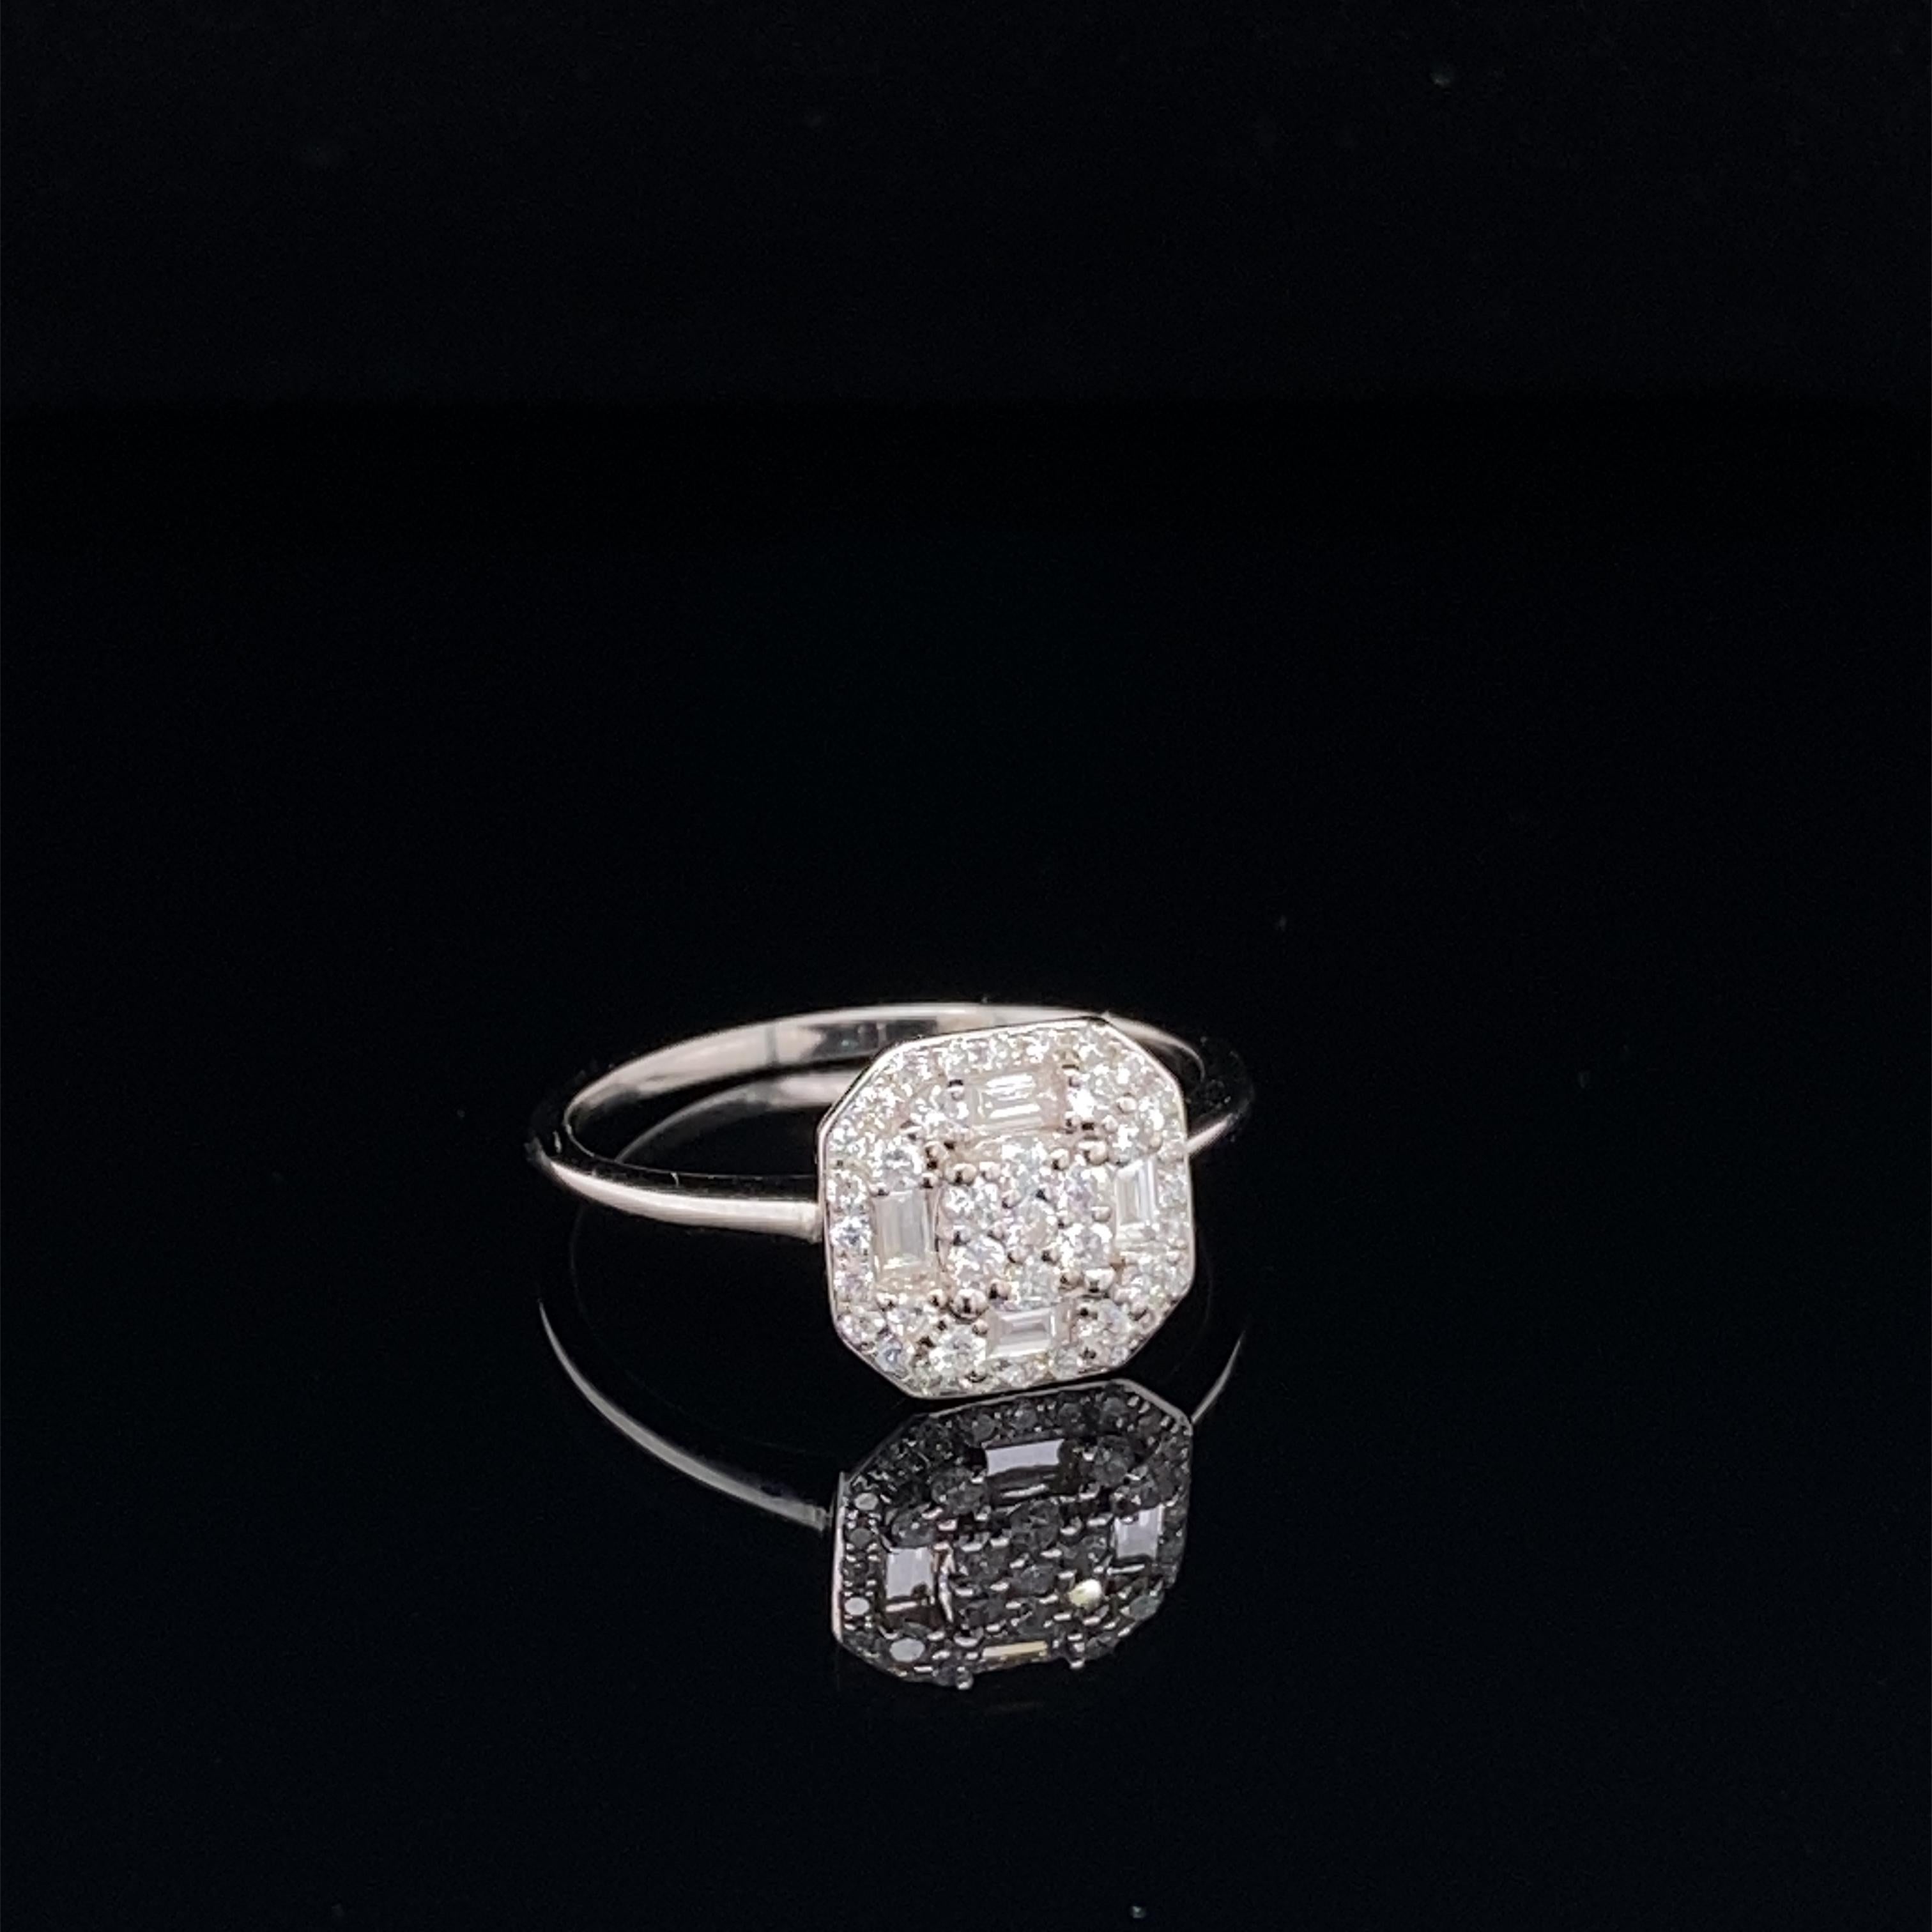 0.42 carat diamond ring